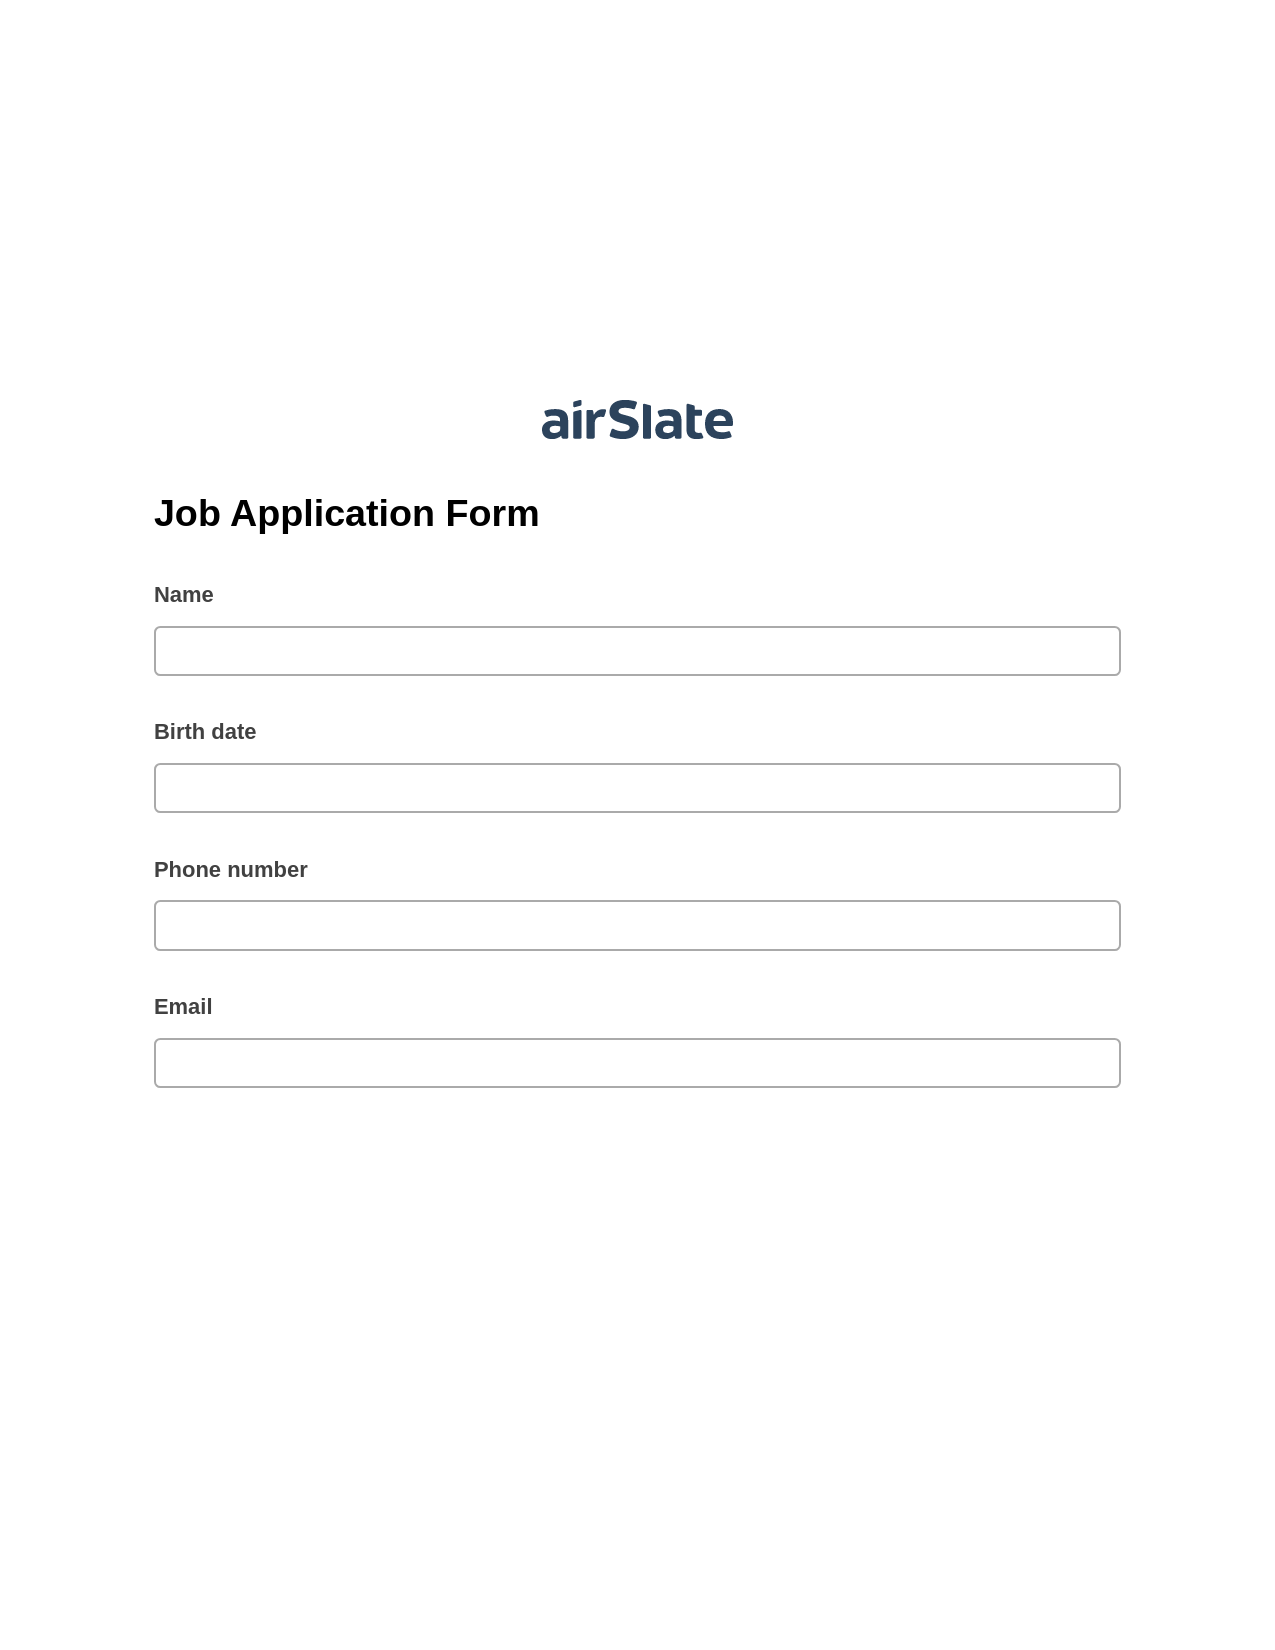 Job Application Form Pre-fill Dropdown from Airtable, Google Sheet Two-Way Binding Bot, Webhook Postfinish Bot